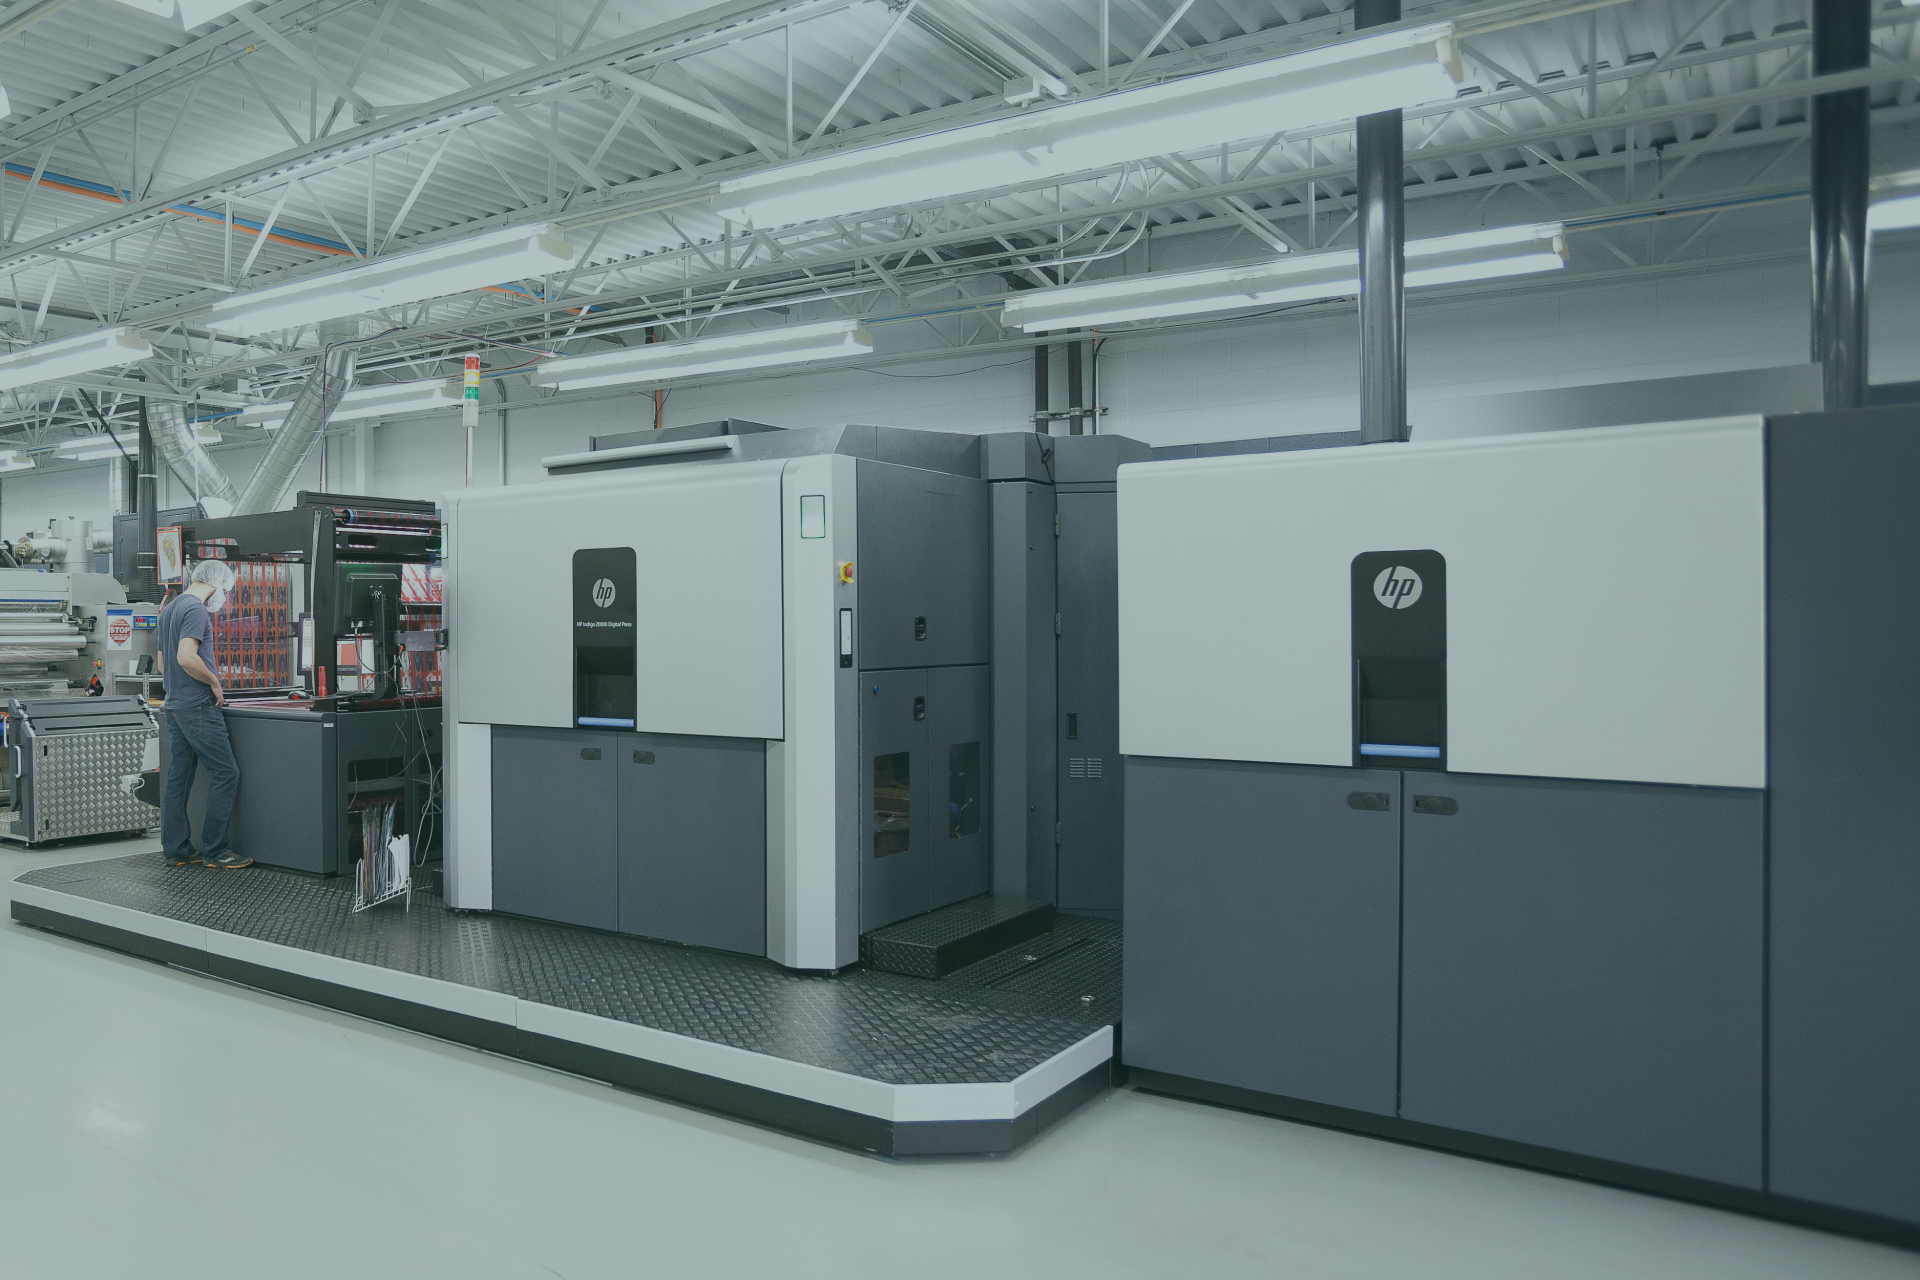 HP Indigo 20000 digital printing press